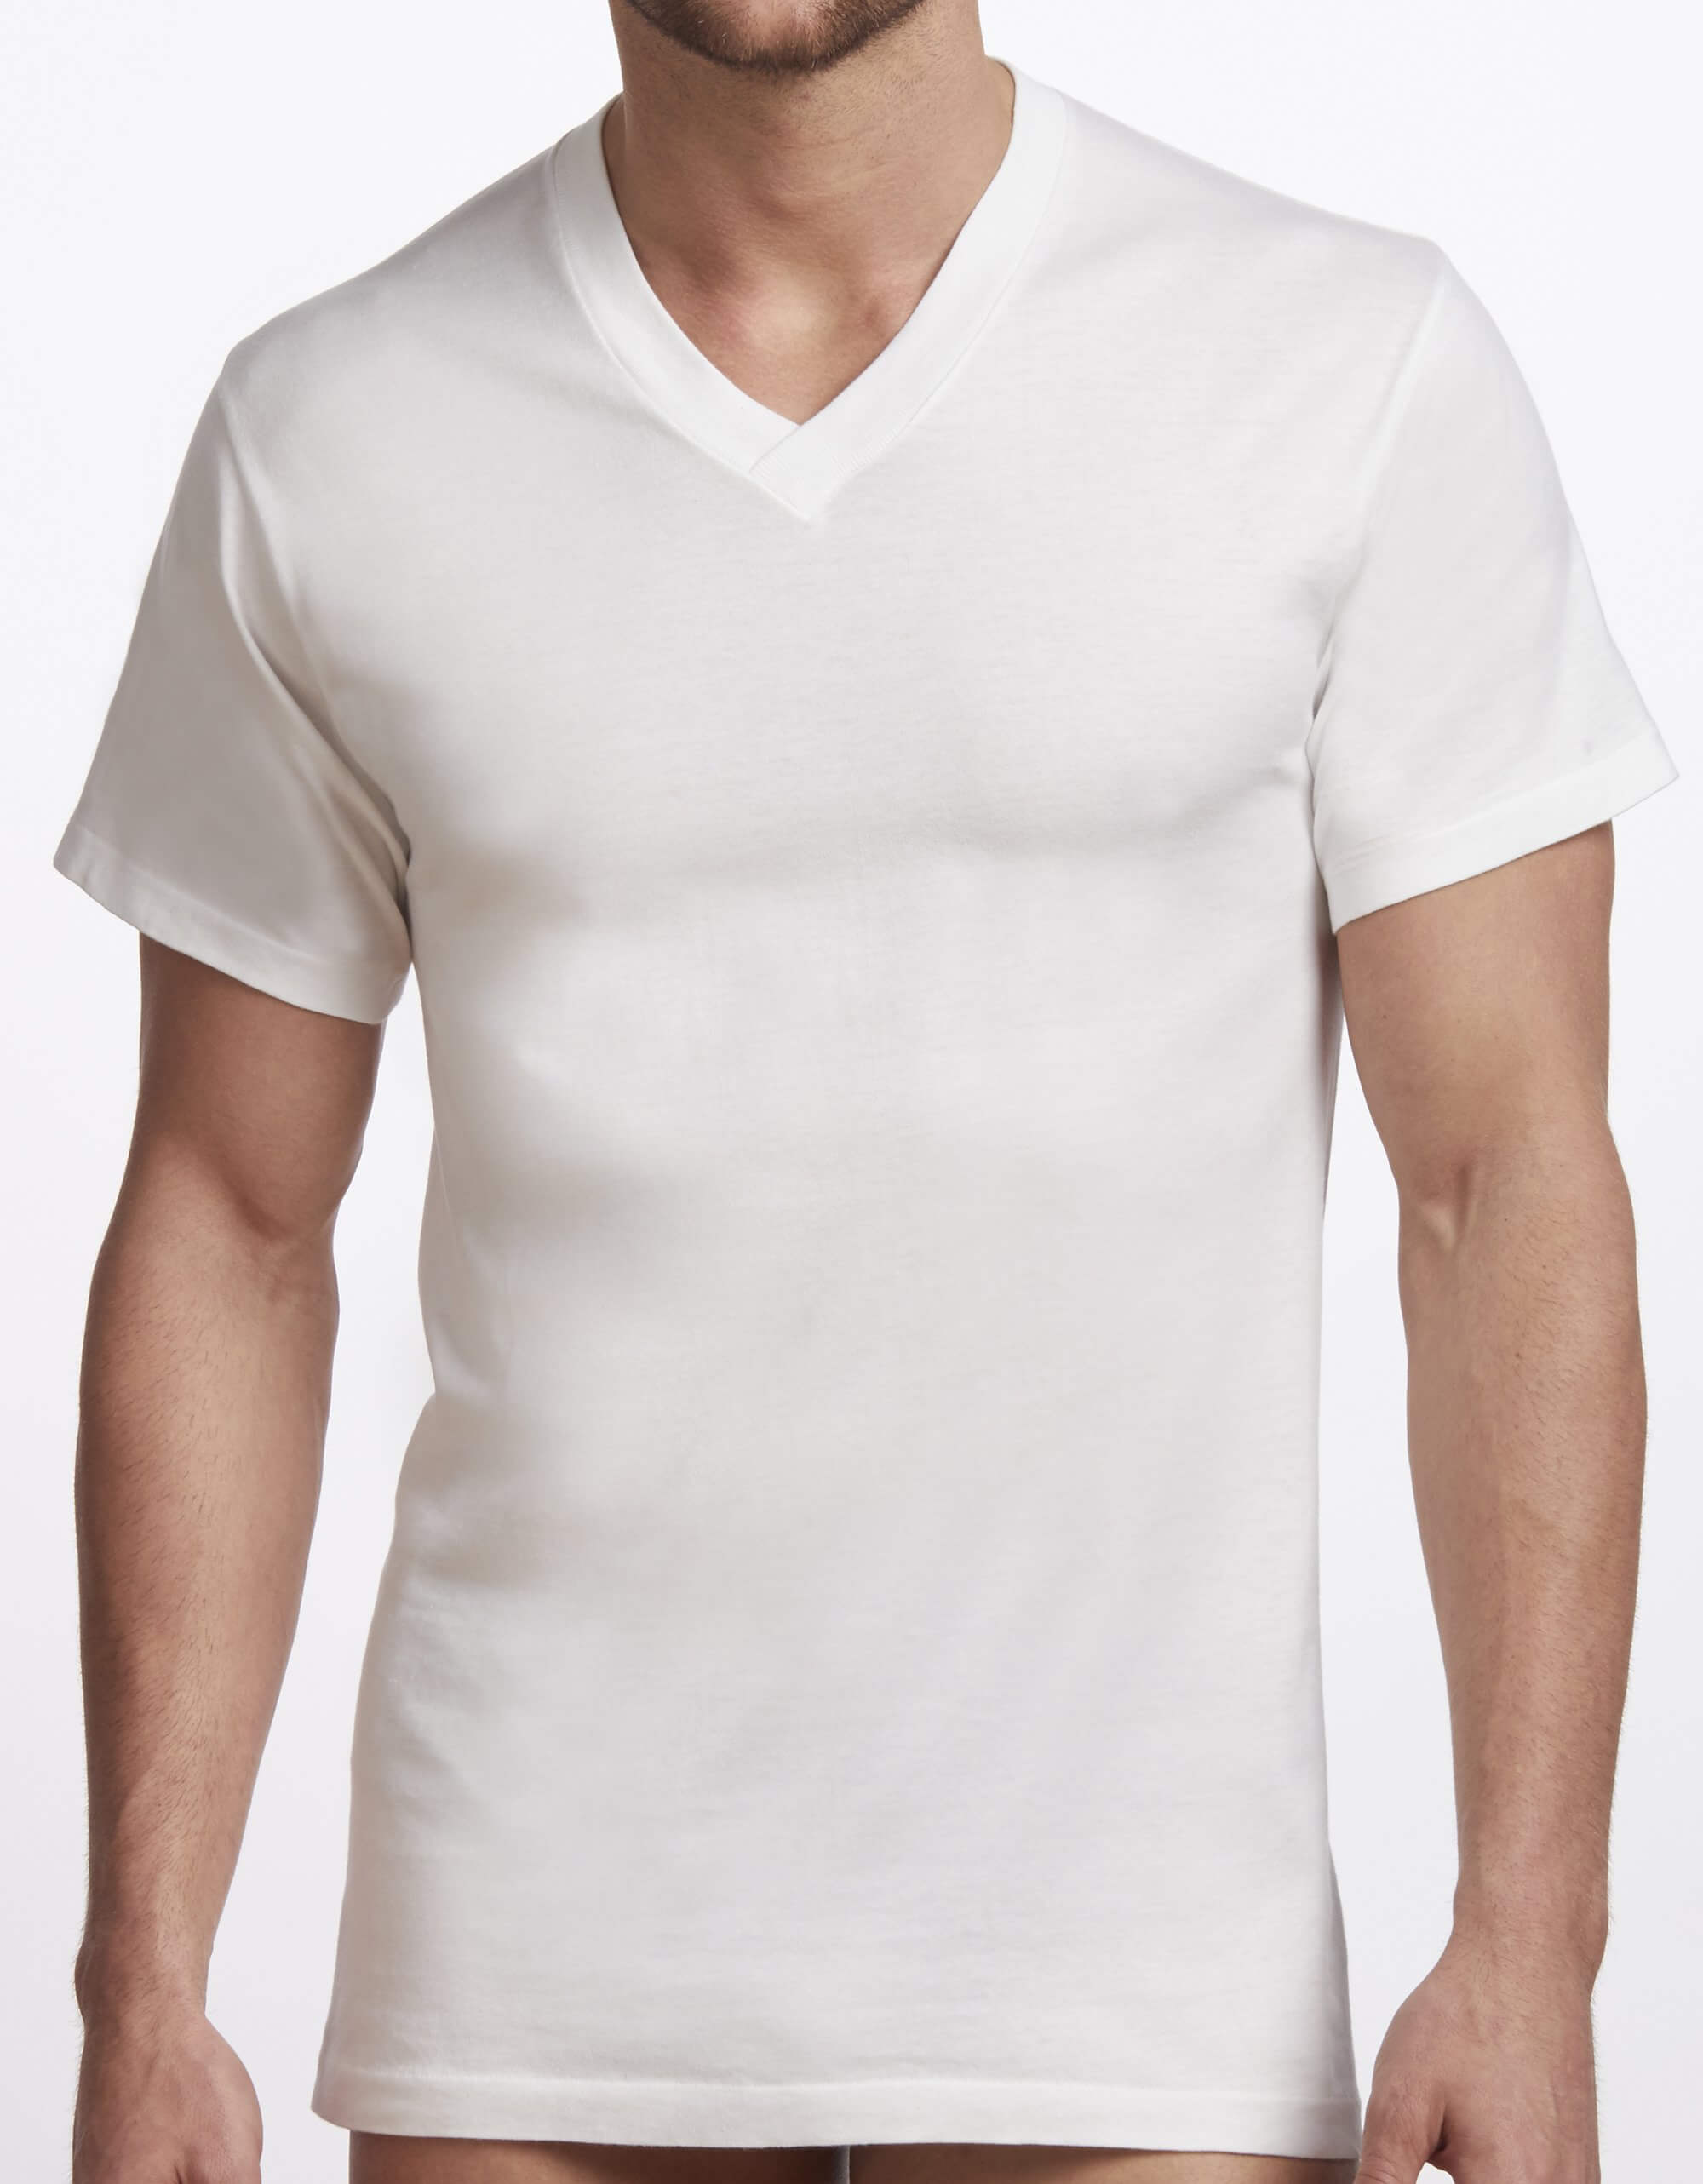 Men's Premium Cotton V-neck T-Shirt - 2 pack